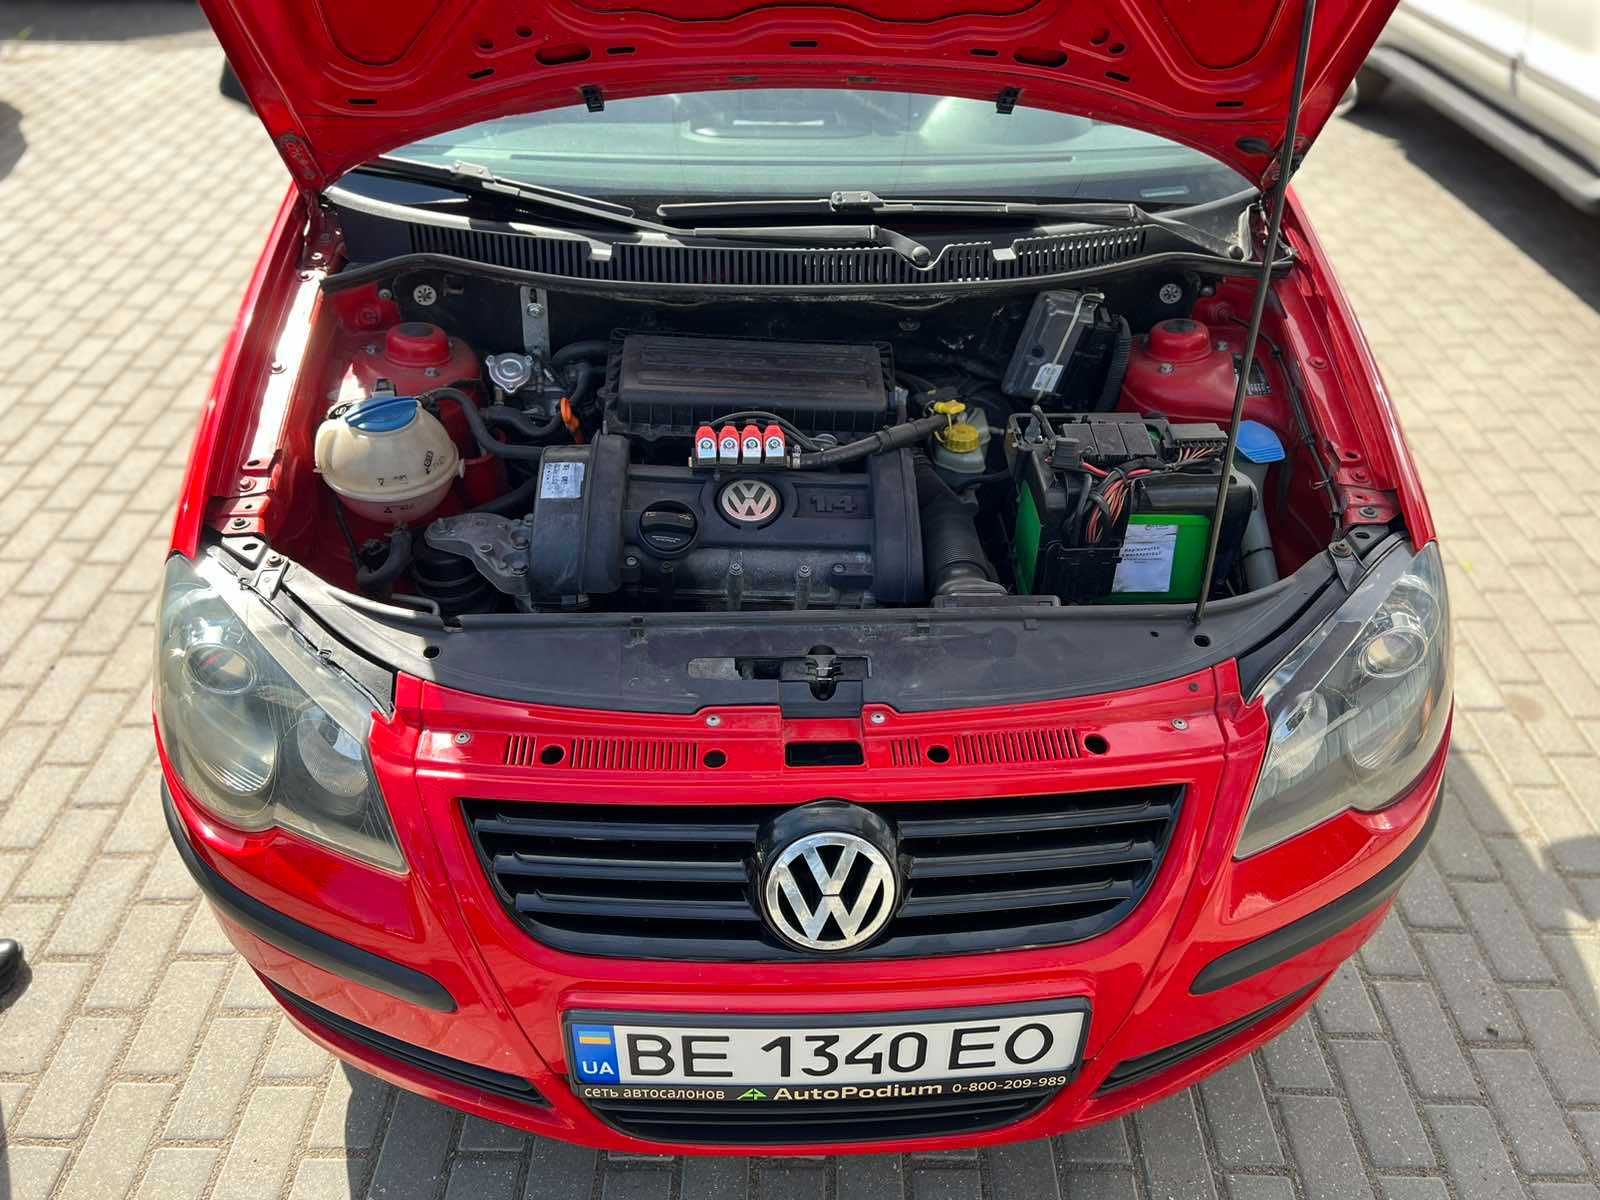 Volkswagen Polo 2007 року 1,4 л. газ/бензин